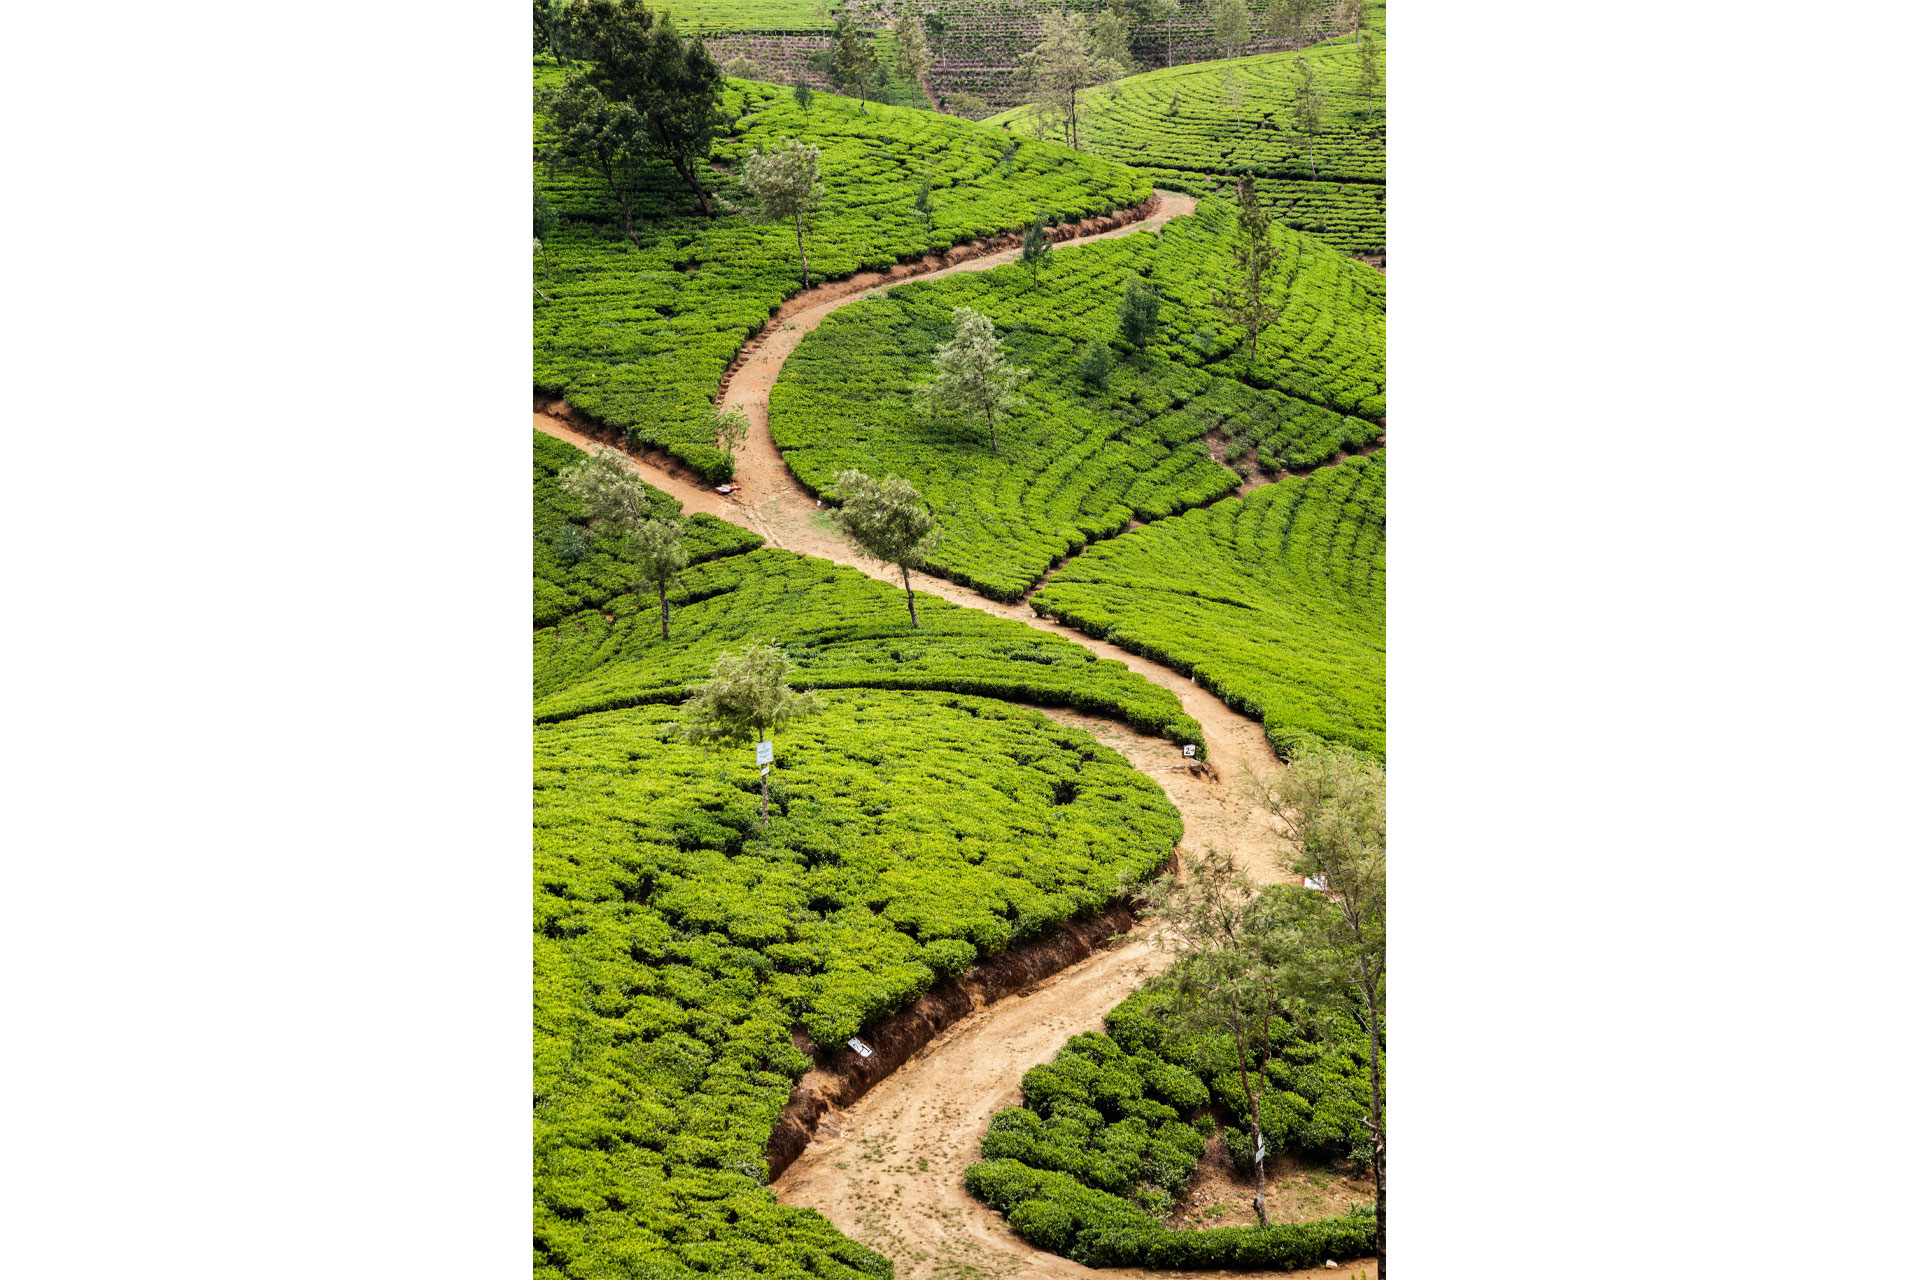 A Tea Plantation in Sri Lanka